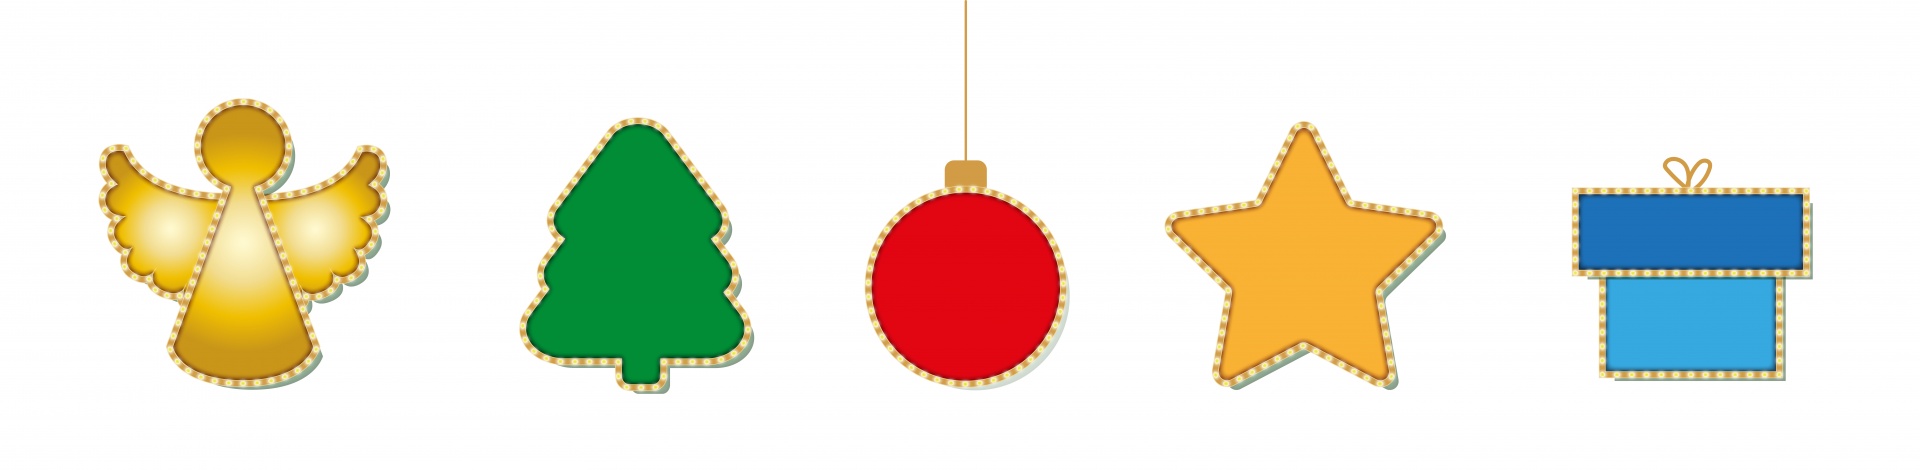 Angel, fir tree, christmas balls, star, gift